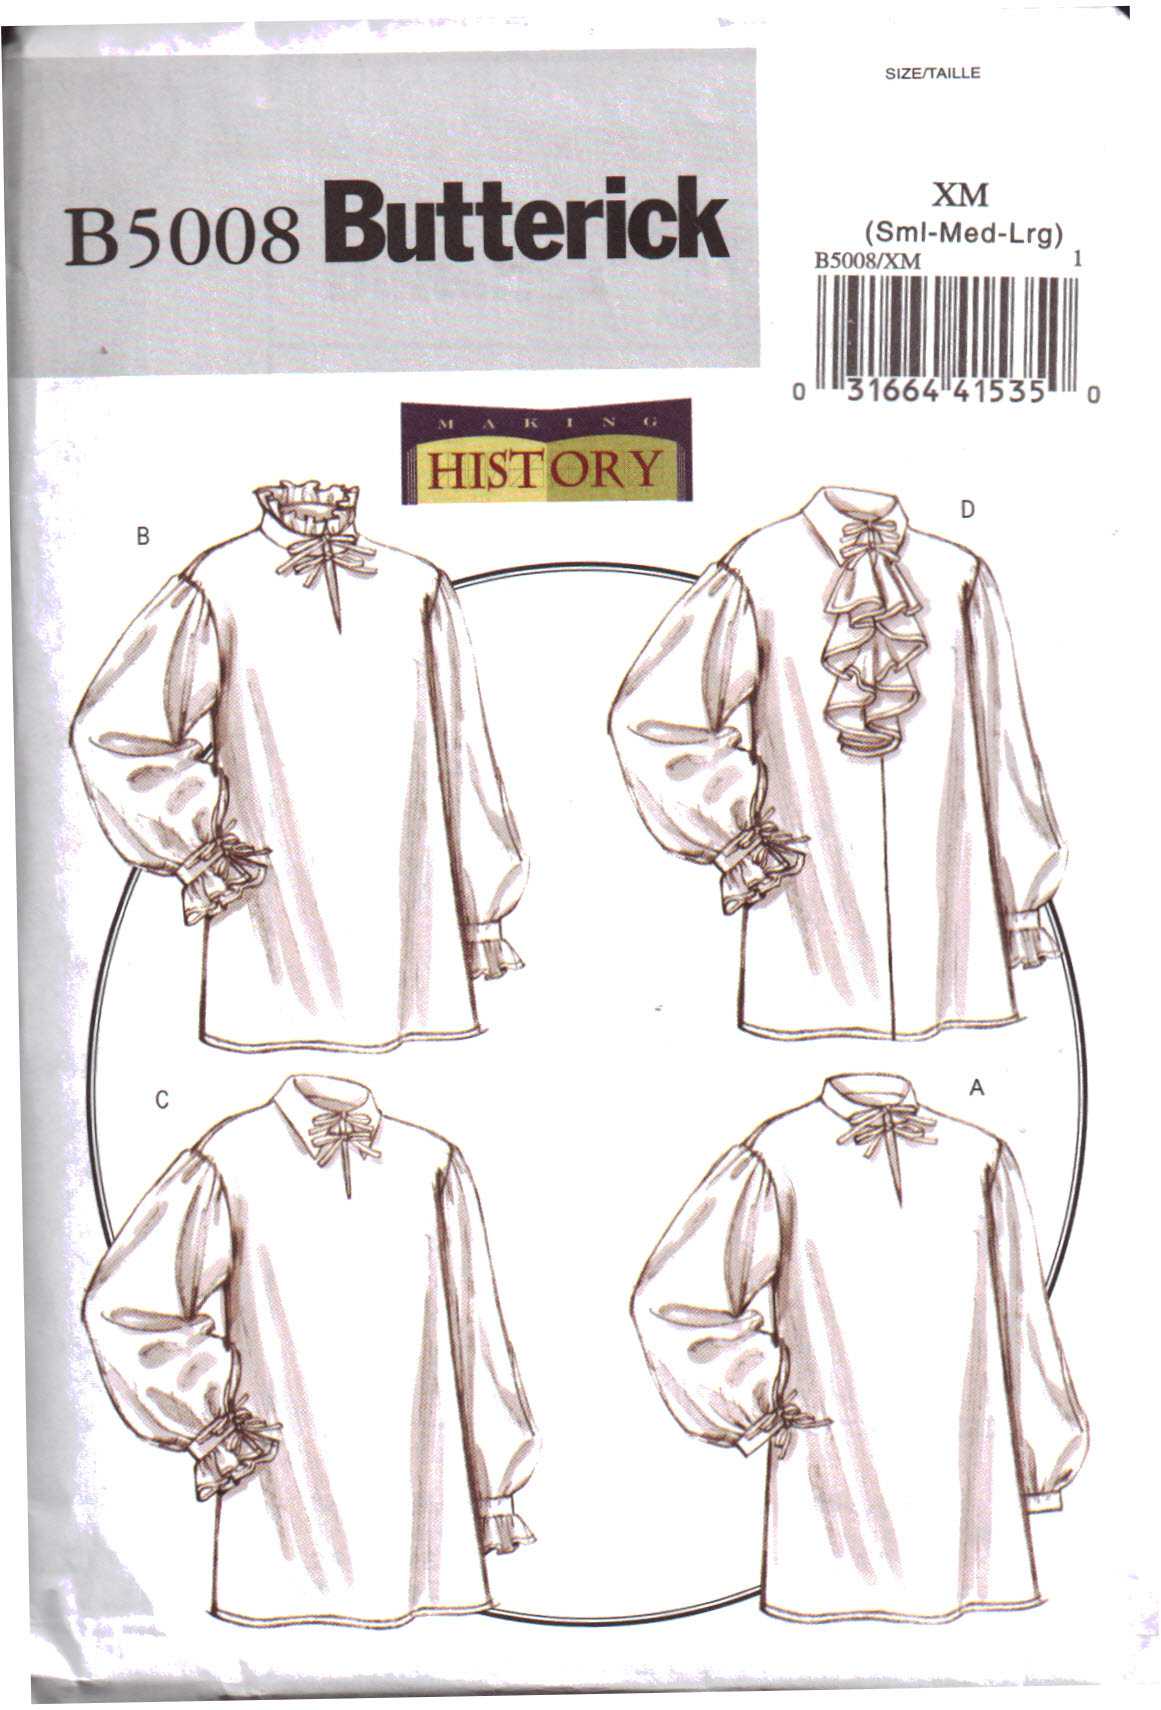 Butterick B5008 Men's Shirt Size: XM 34/36-38/40-42/44 Uncut Sewing Pattern